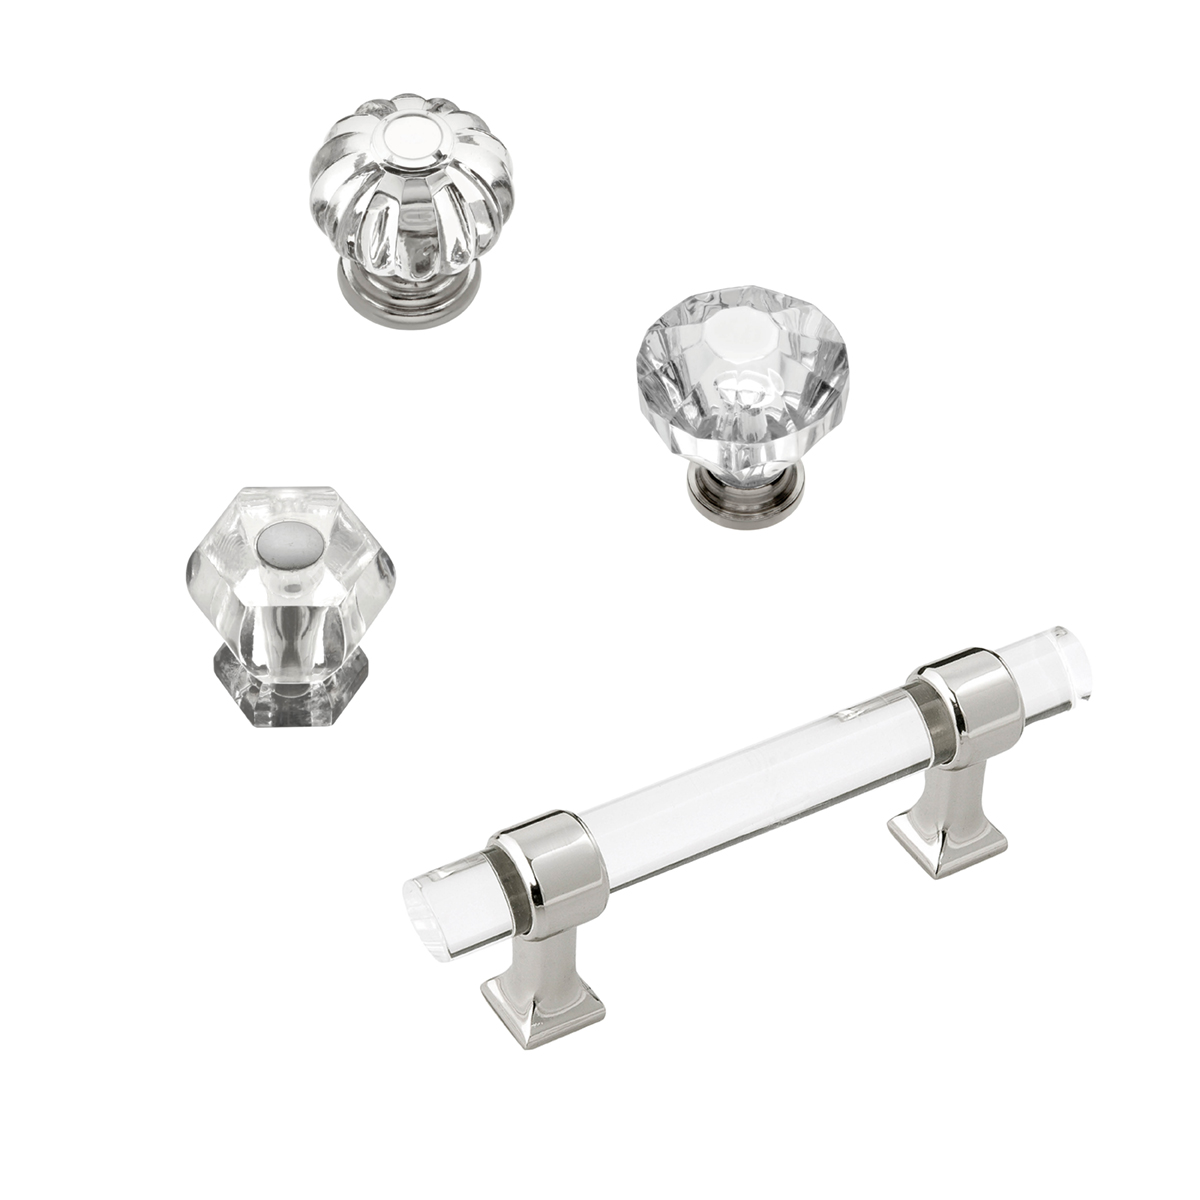 Crystal palace crysacrylic nickel handle hardware